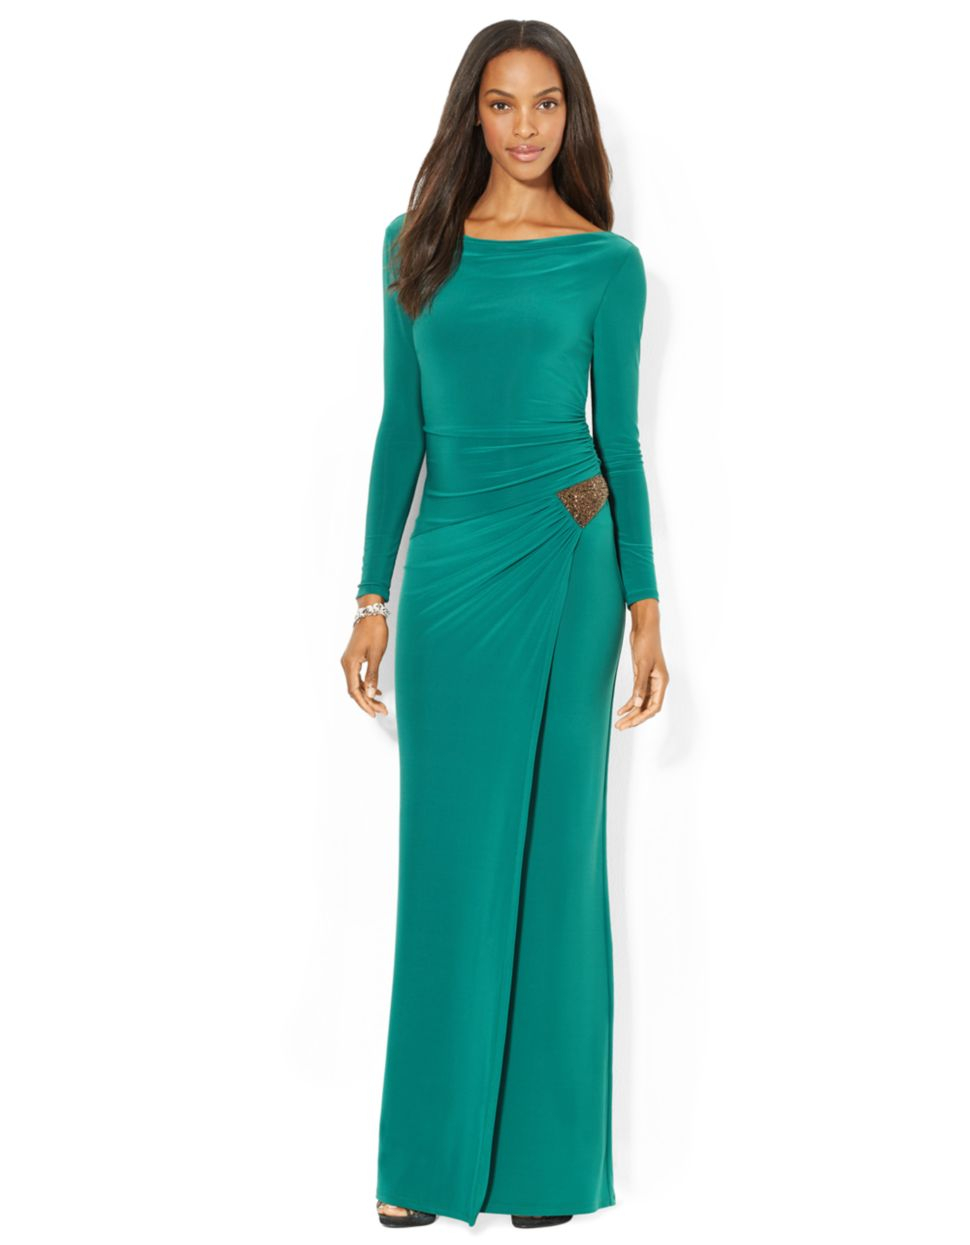 Lauren by ralph lauren Jersey Side Draped Evening Gown in Green | Lyst